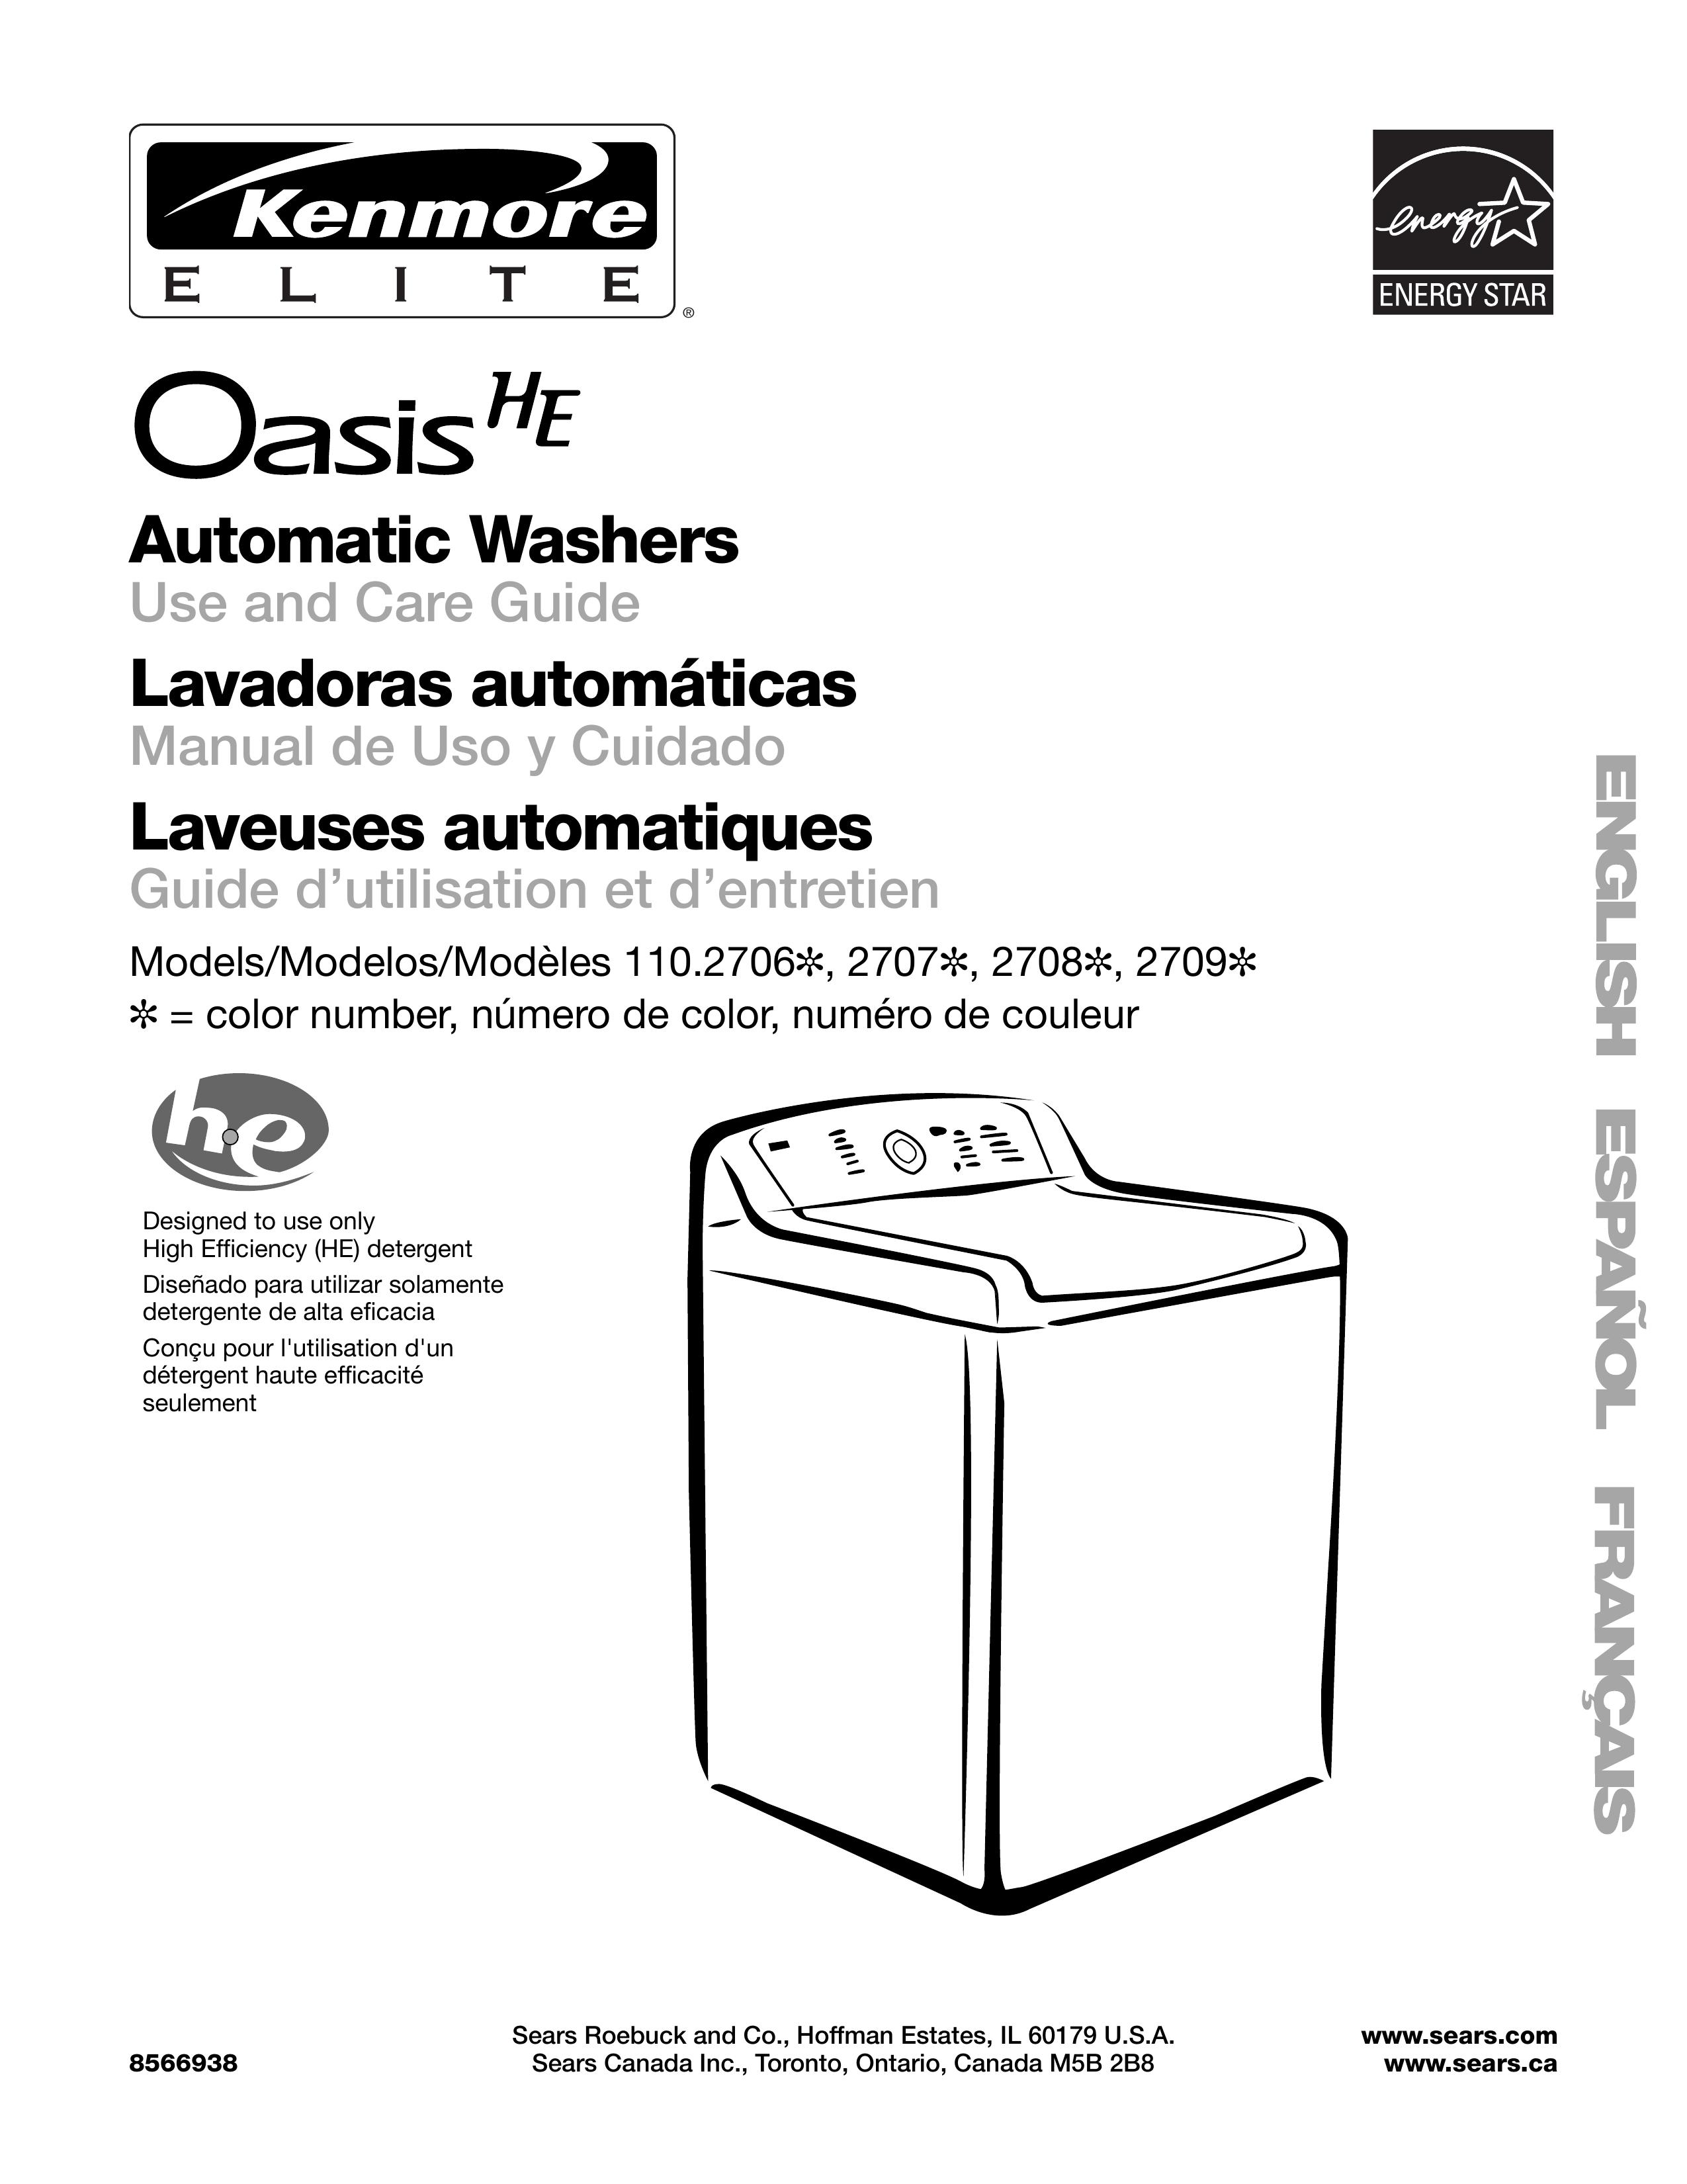 Kenmore 2709 Washer/Dryer User Manual